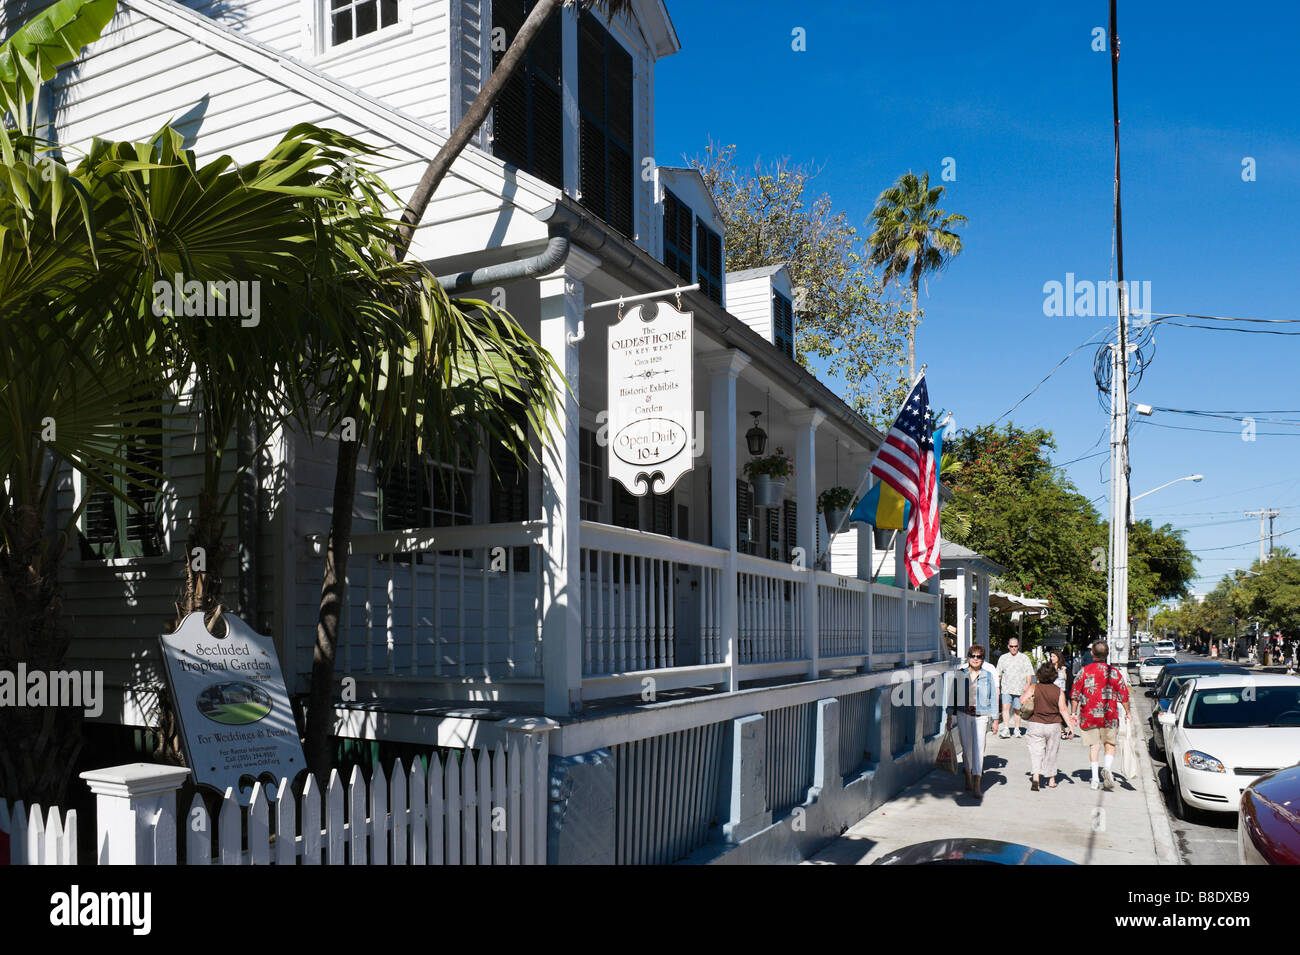 La più antica casa di Key West che risale circa al 1829, Duval Street, Key West, Florida Keys, STATI UNITI D'AMERICA Foto Stock